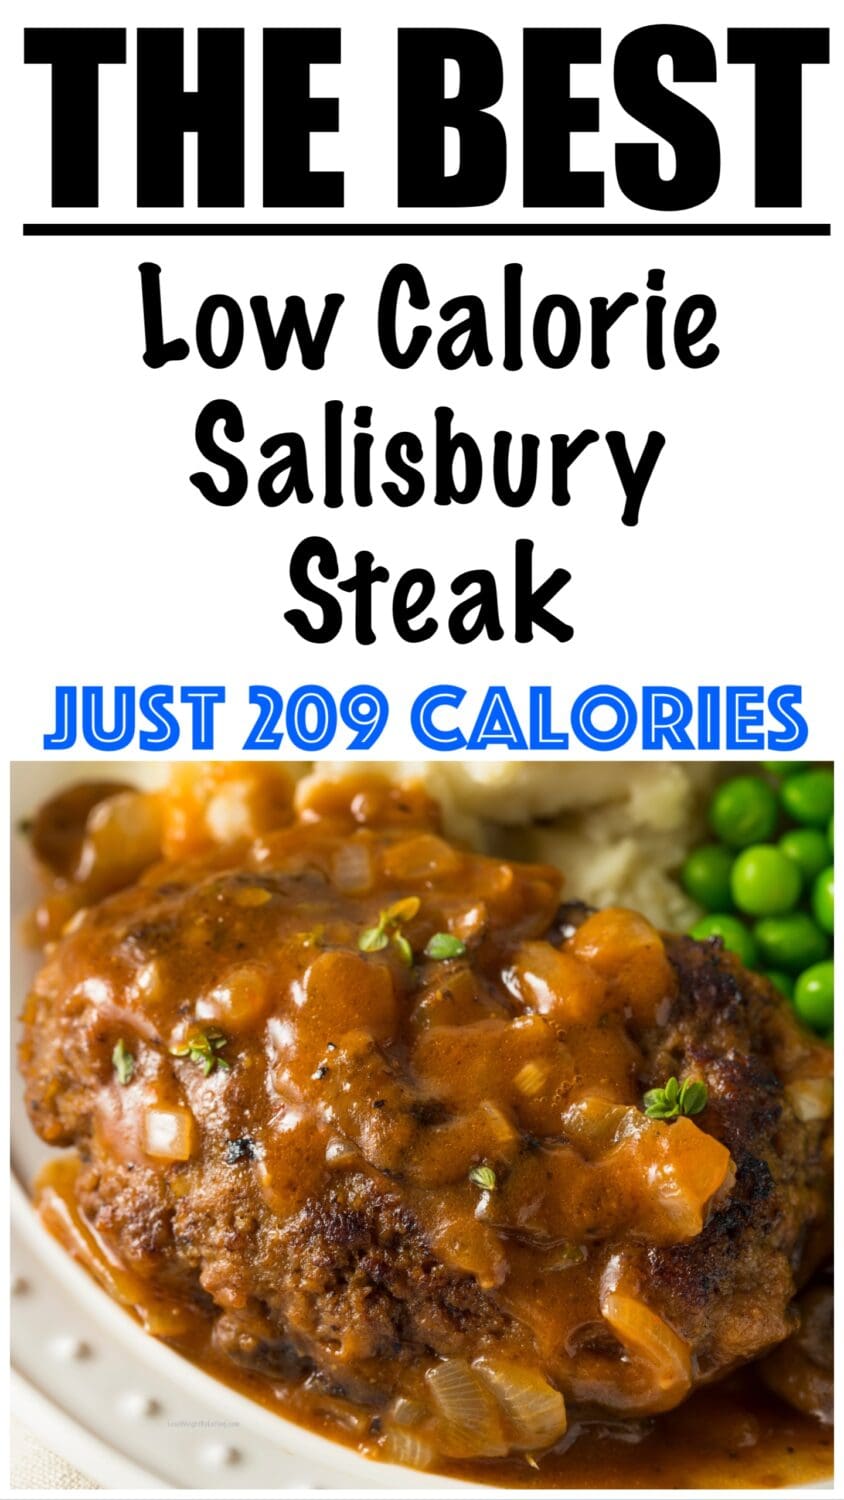 Low Calorie Salisbury Steak Recipe